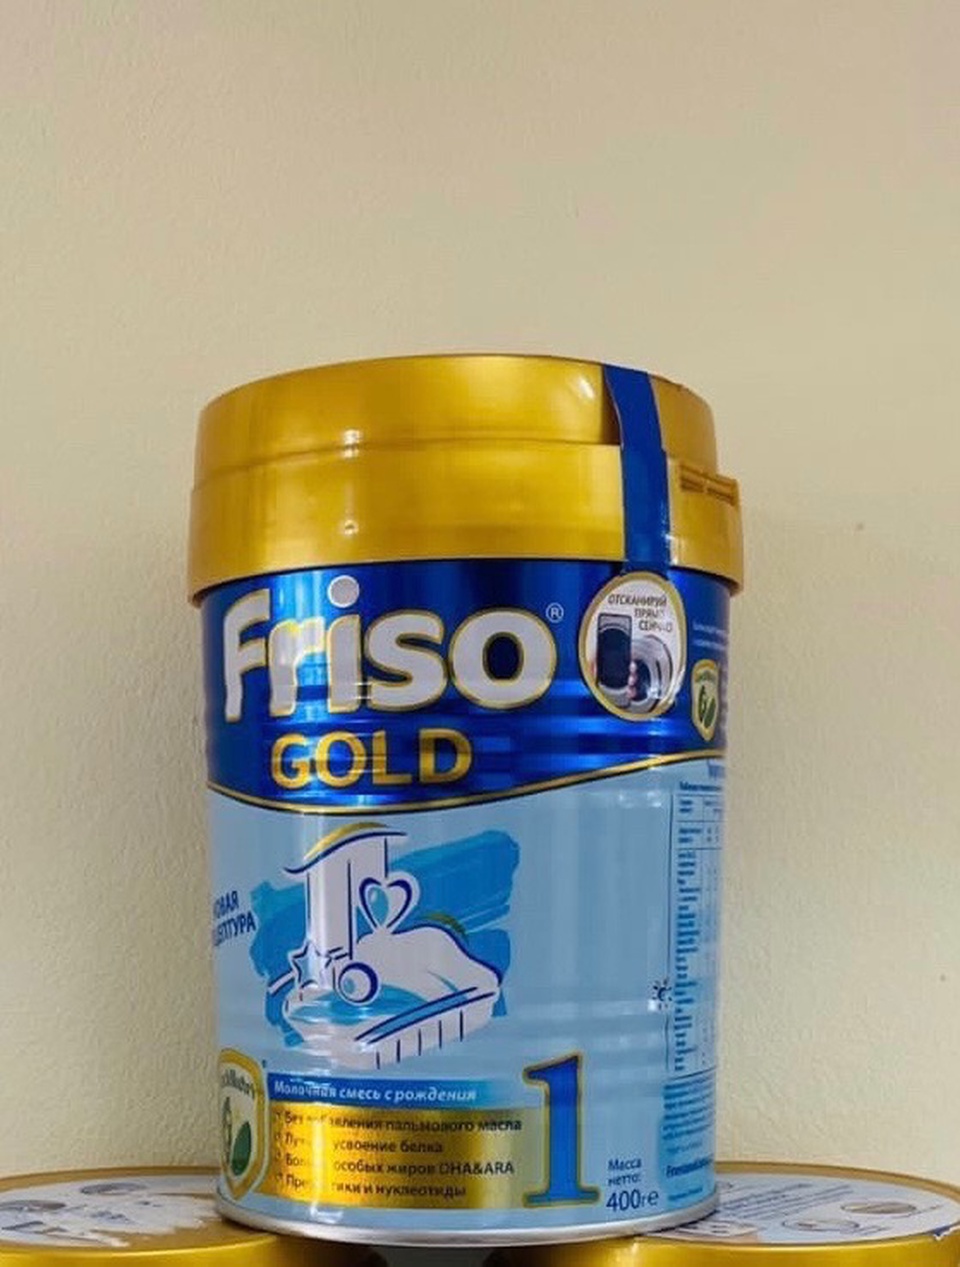 Friso gold 1 400гр - 750 ₽, заказать онлайн.